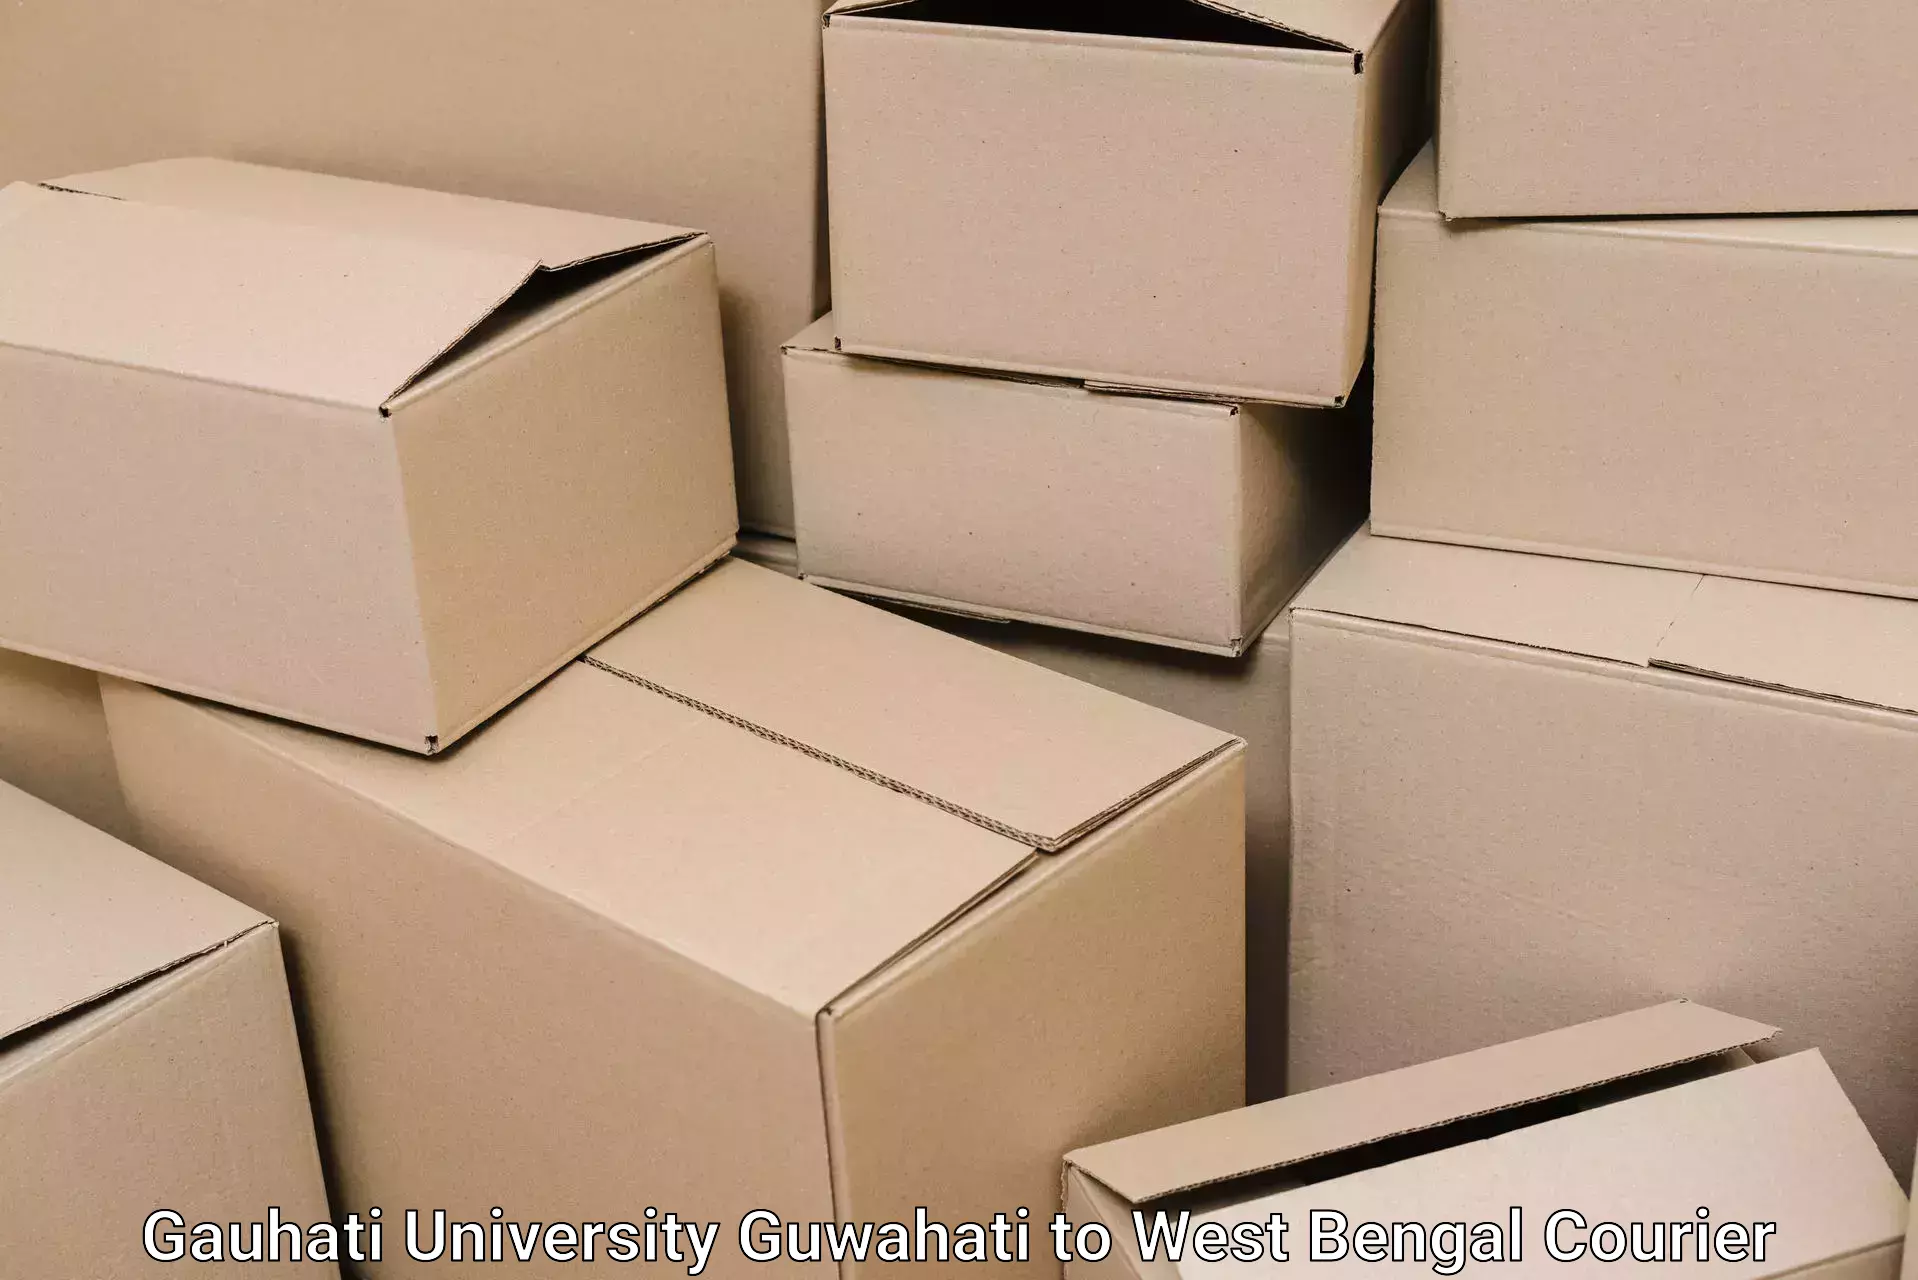 Efficient moving company Gauhati University Guwahati to Shantiniketan